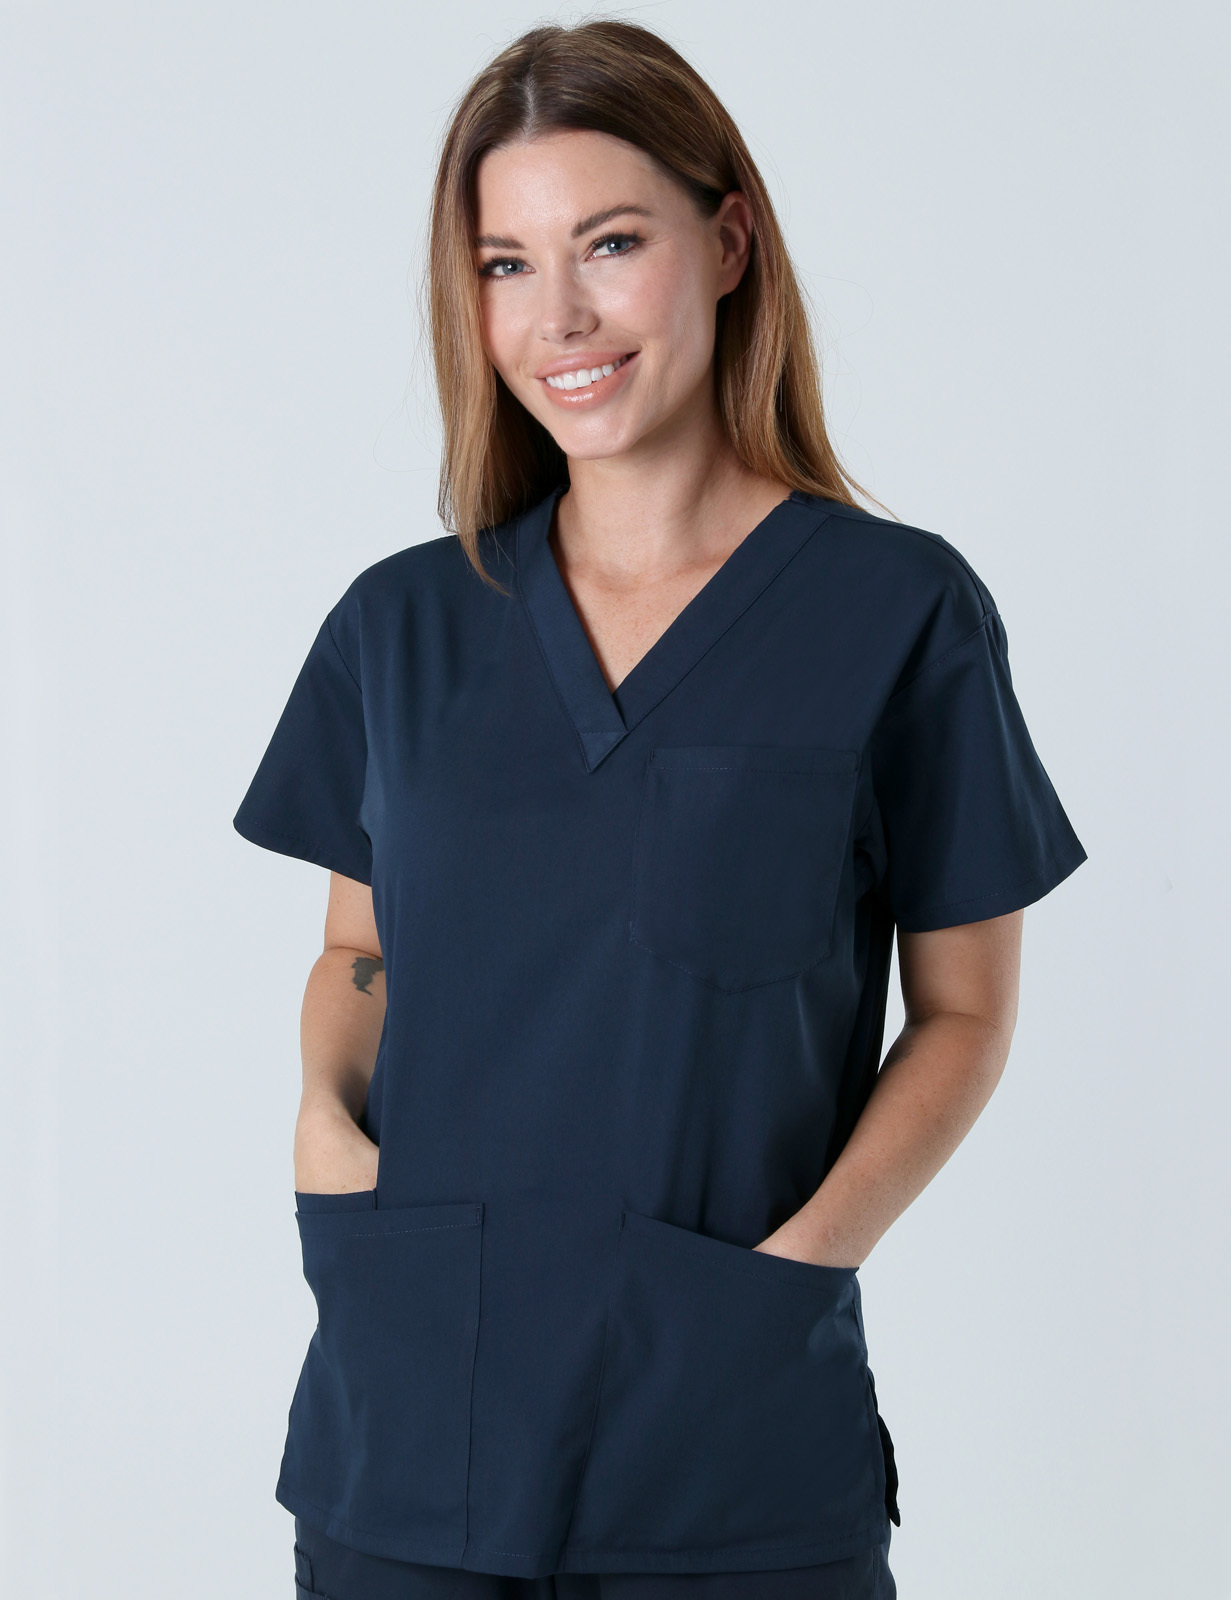 Rockhampton Hospital Registered Nurse Uniform Set Bundle (4 Pocket Top and Cargo Pants in Navy incl Logos)